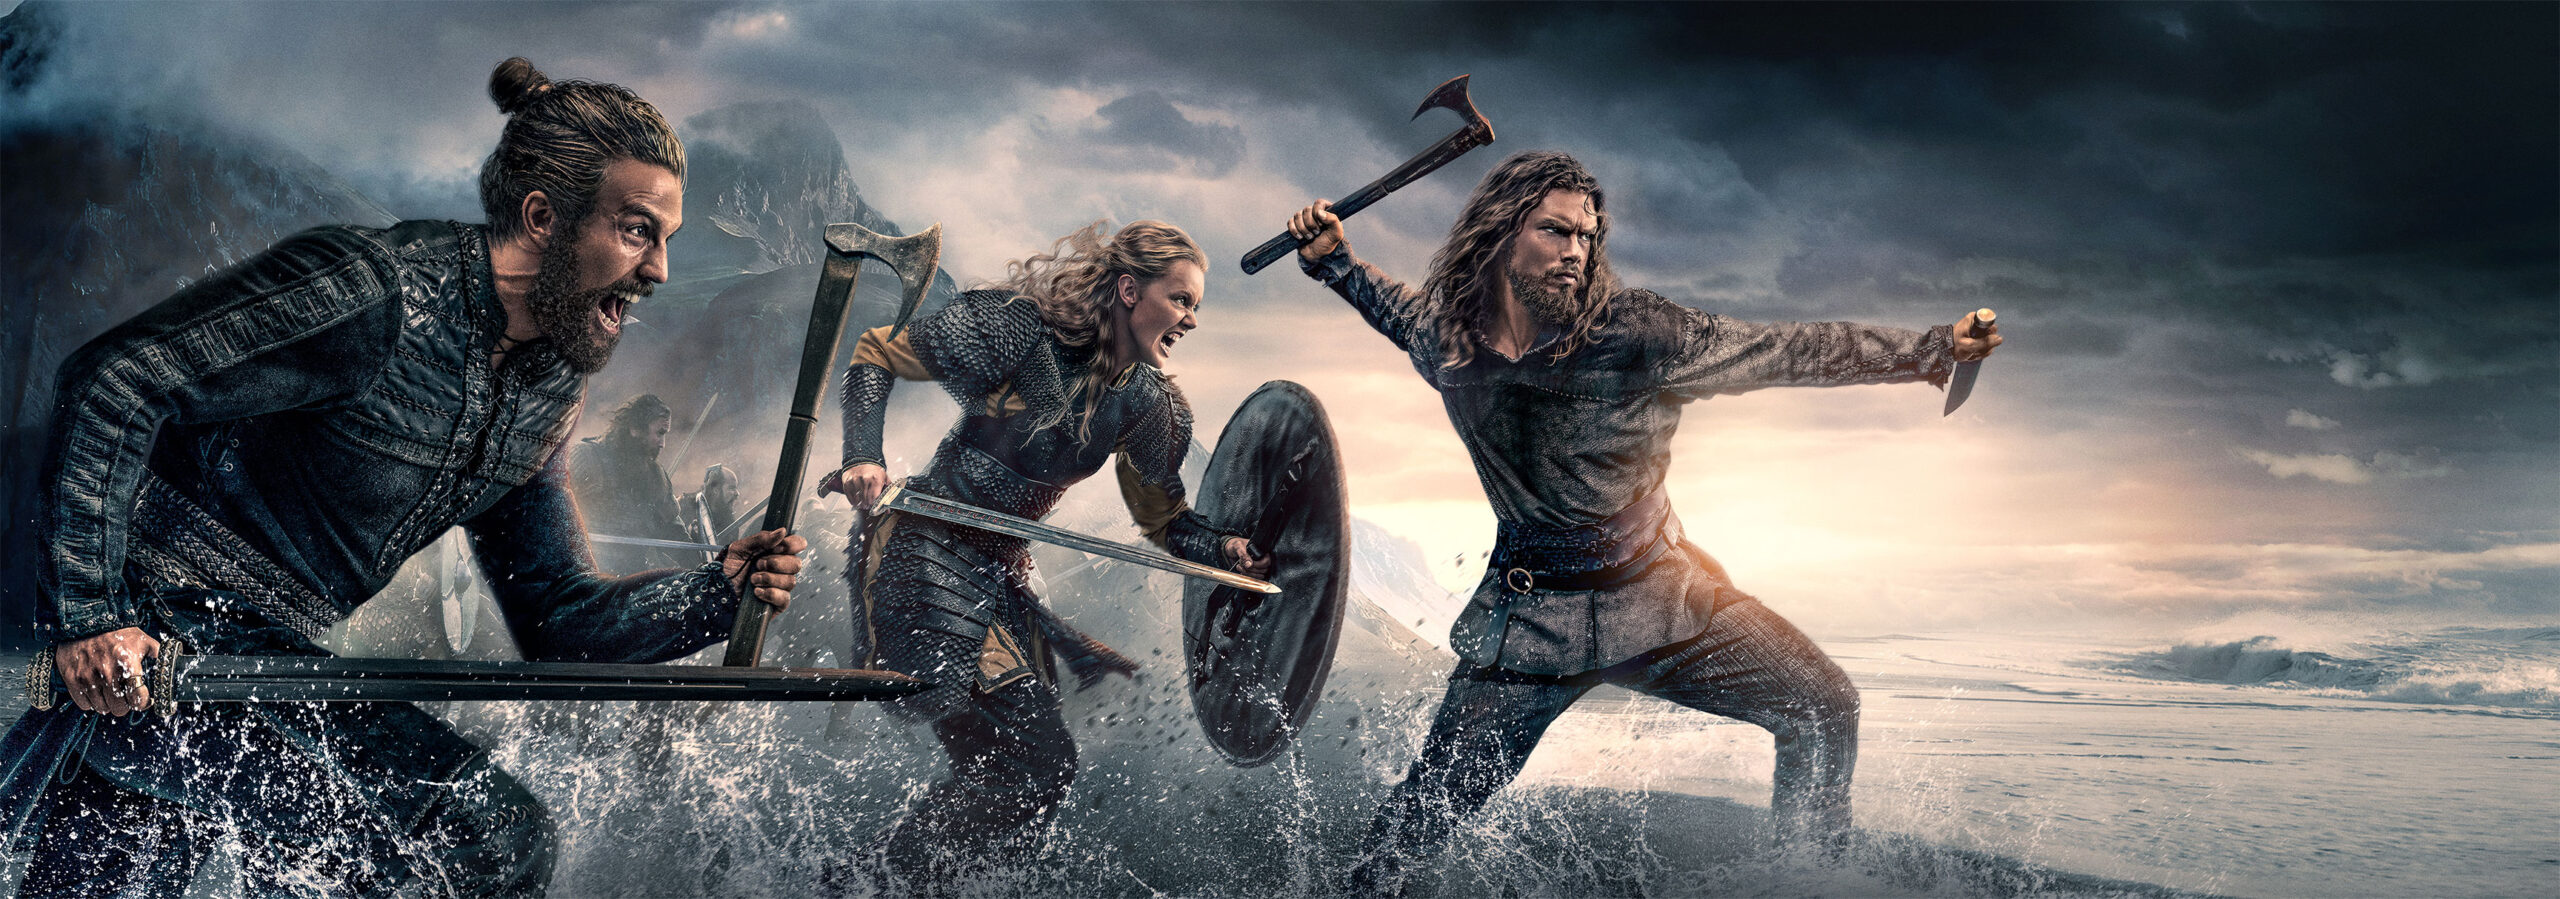 Poster Vikings: Valhalla